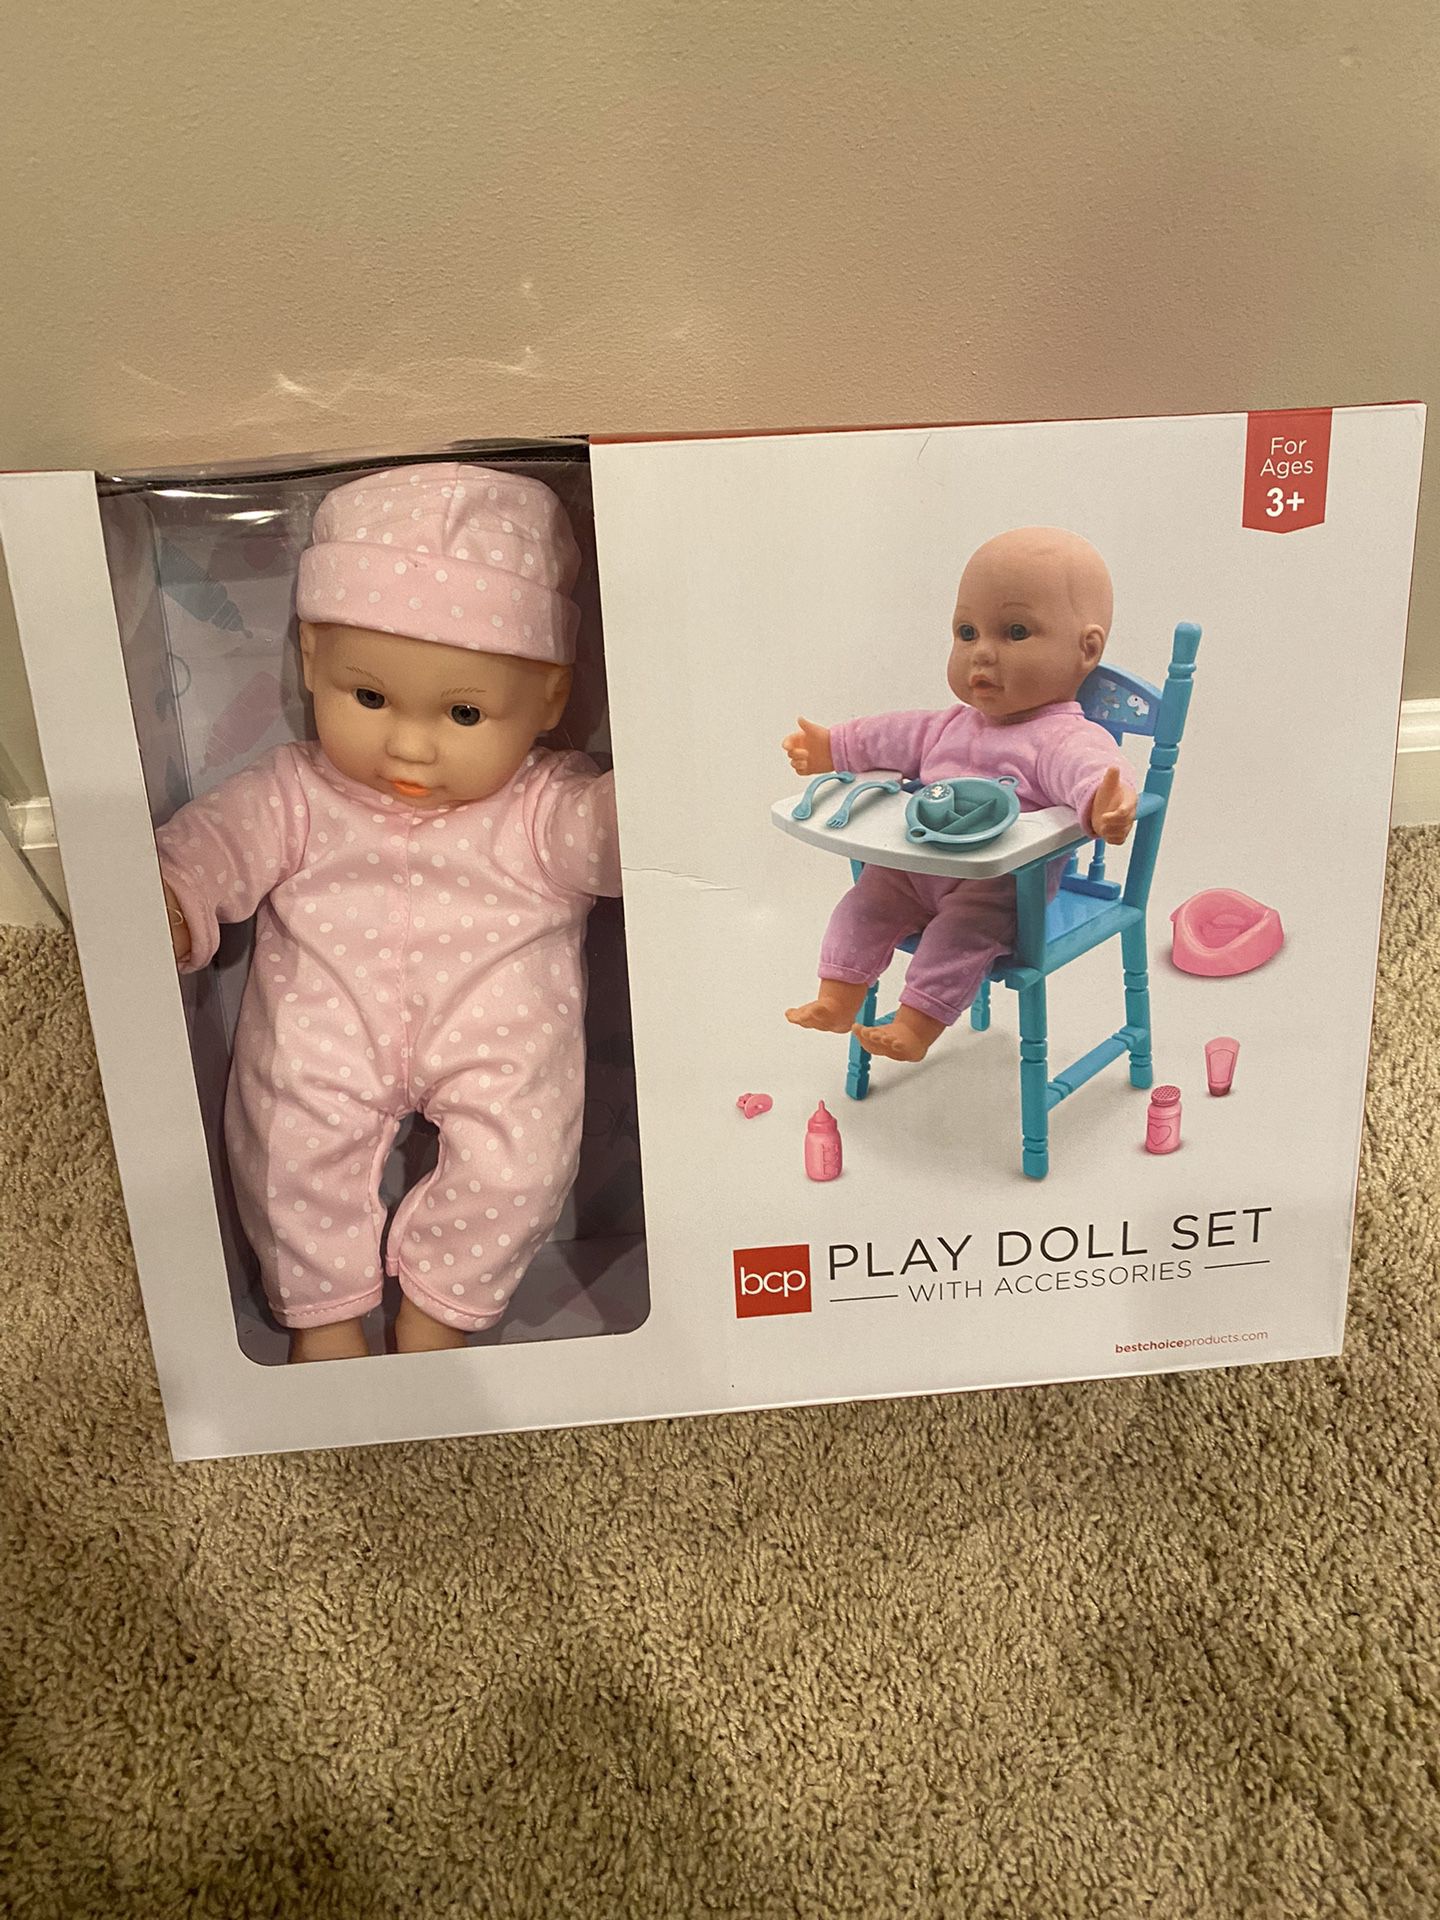 Play doll set